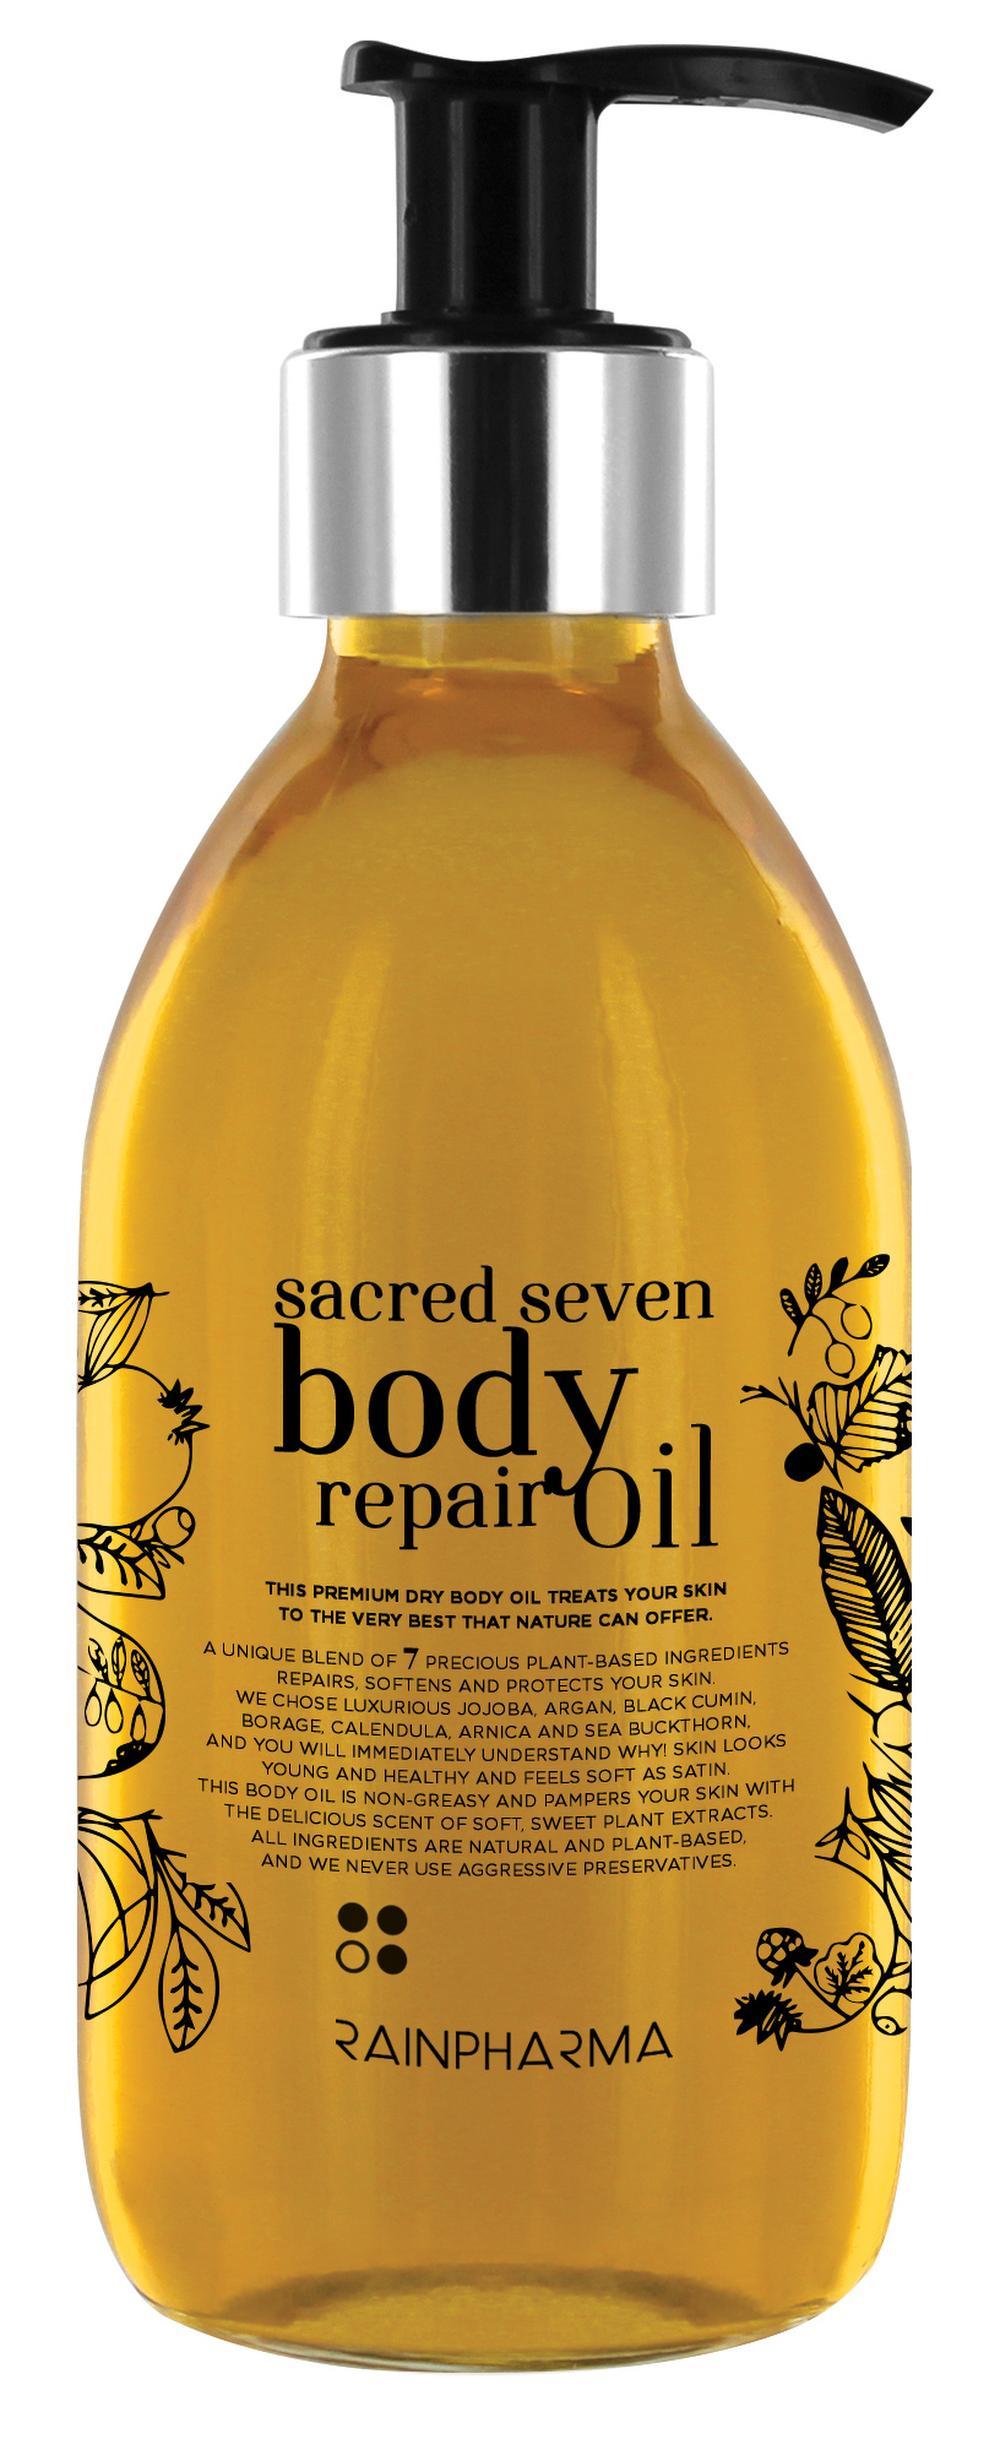 Sacred Seven Body Repair Oil, RainPharma, 49 euros les 200 ml.